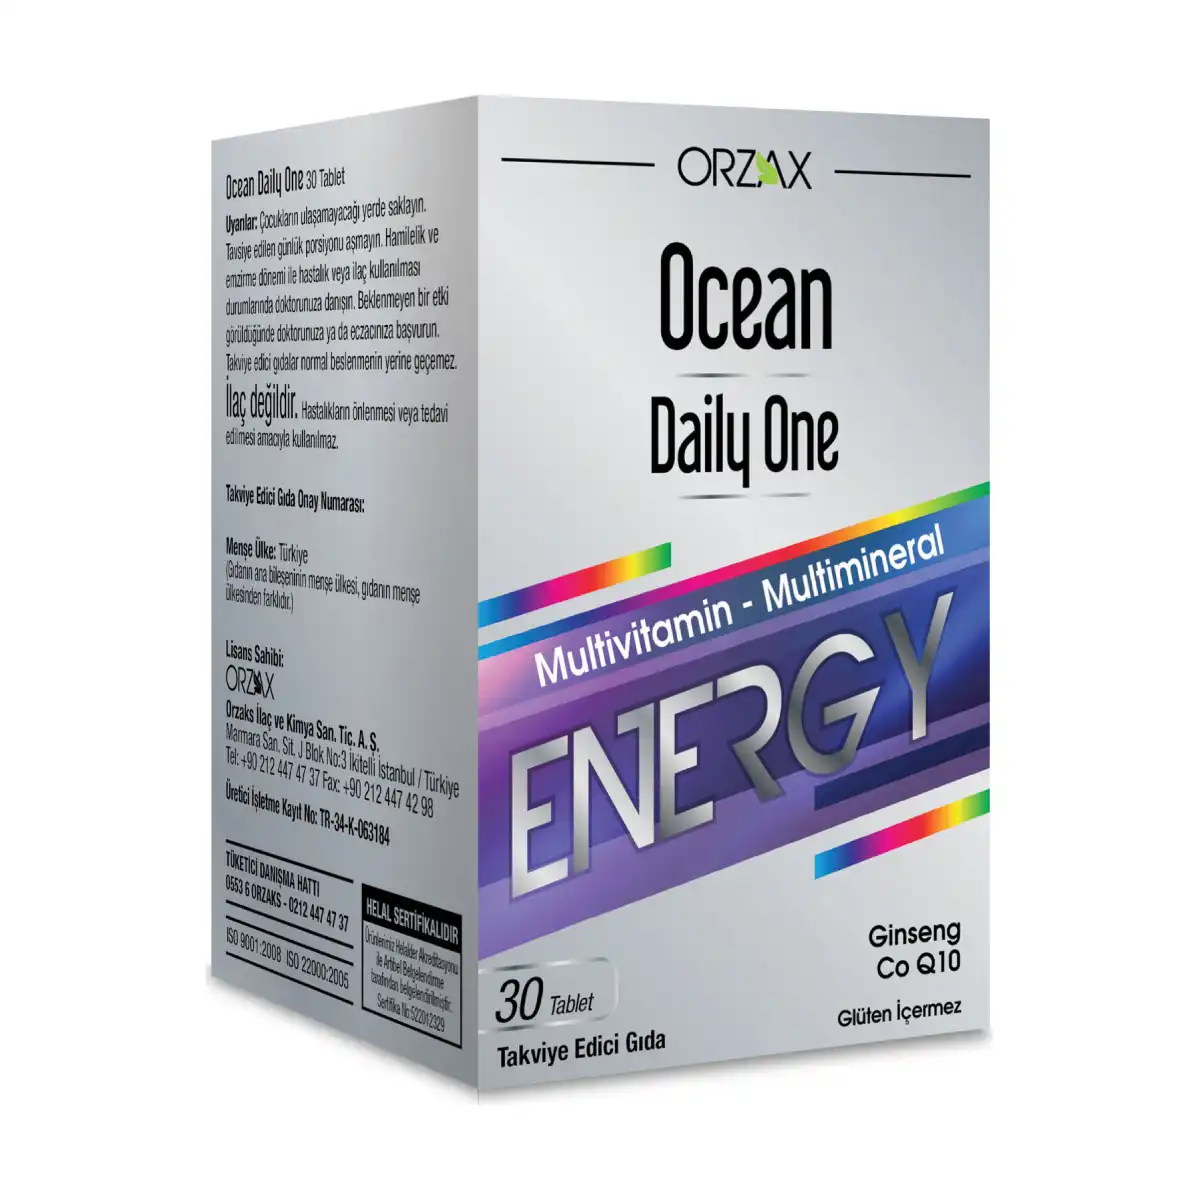 Orzax Ocean Daily One Energy Multivitamin